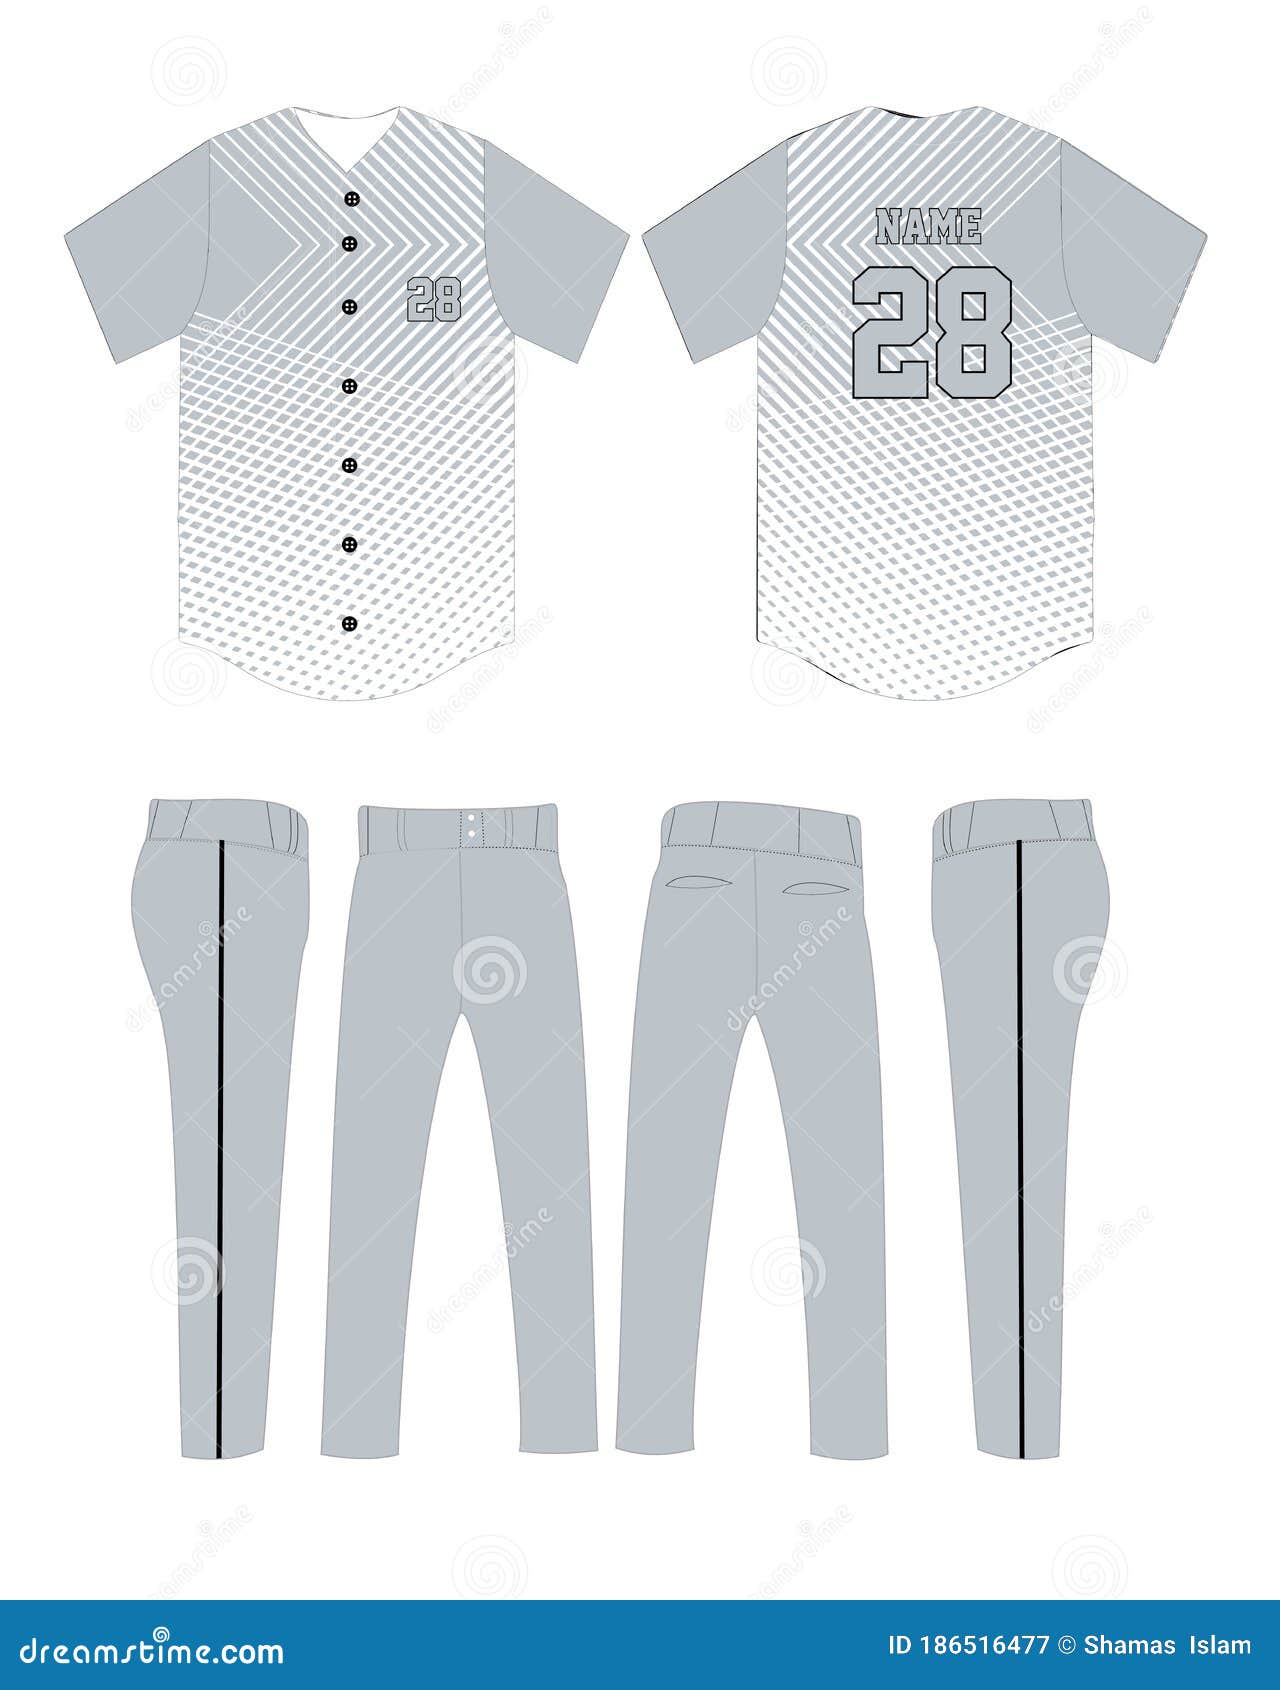 Baseball Jersey Full Button Mock up Template Flat Sketch 